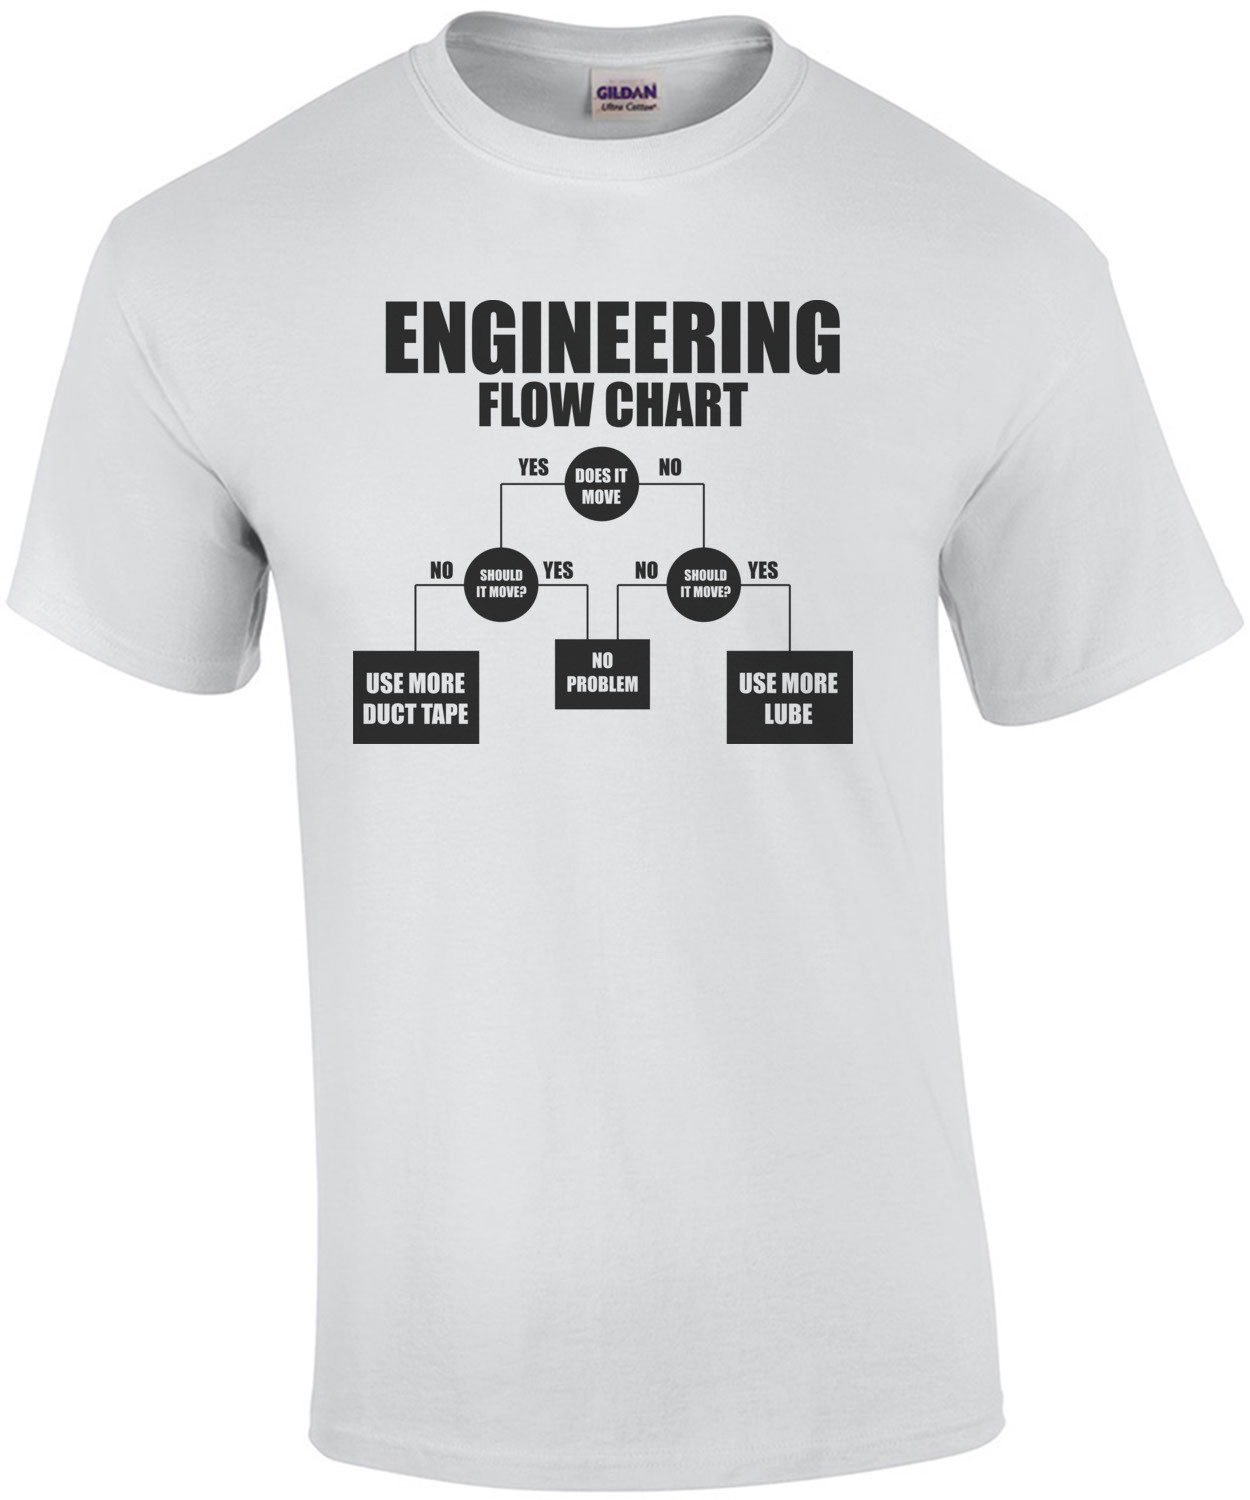 Engineering Flow Chart - Funny Engineering T-Shirt